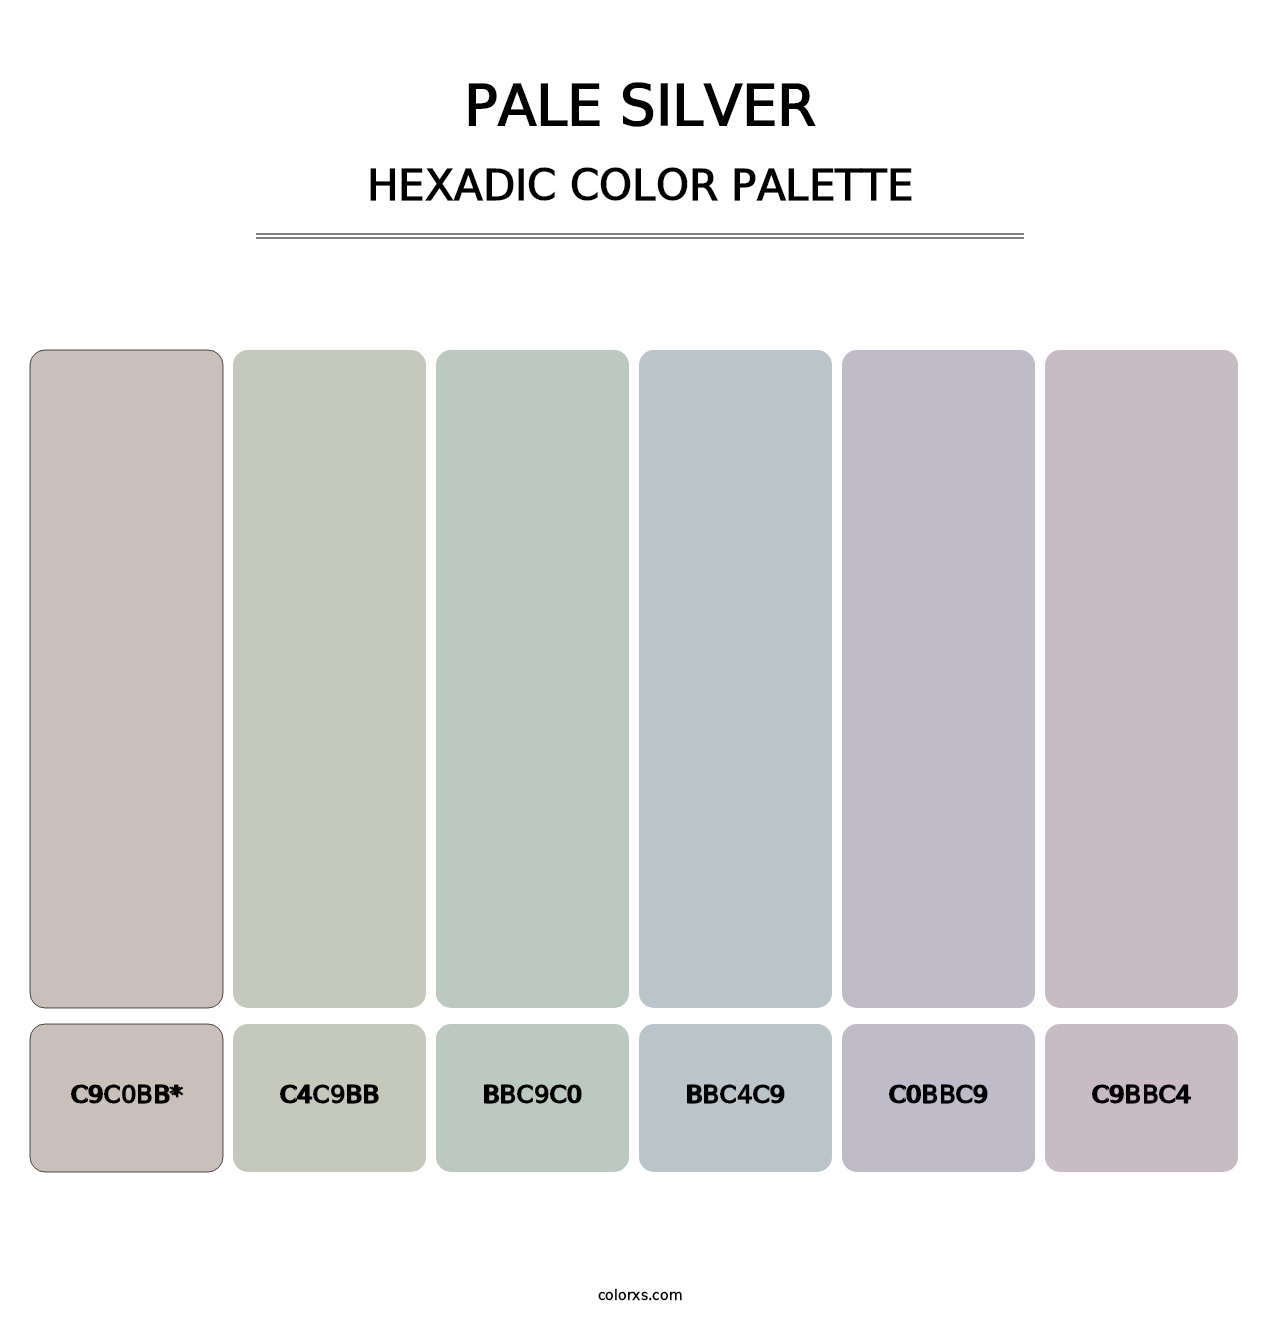 Pale Silver - Hexadic Color Palette